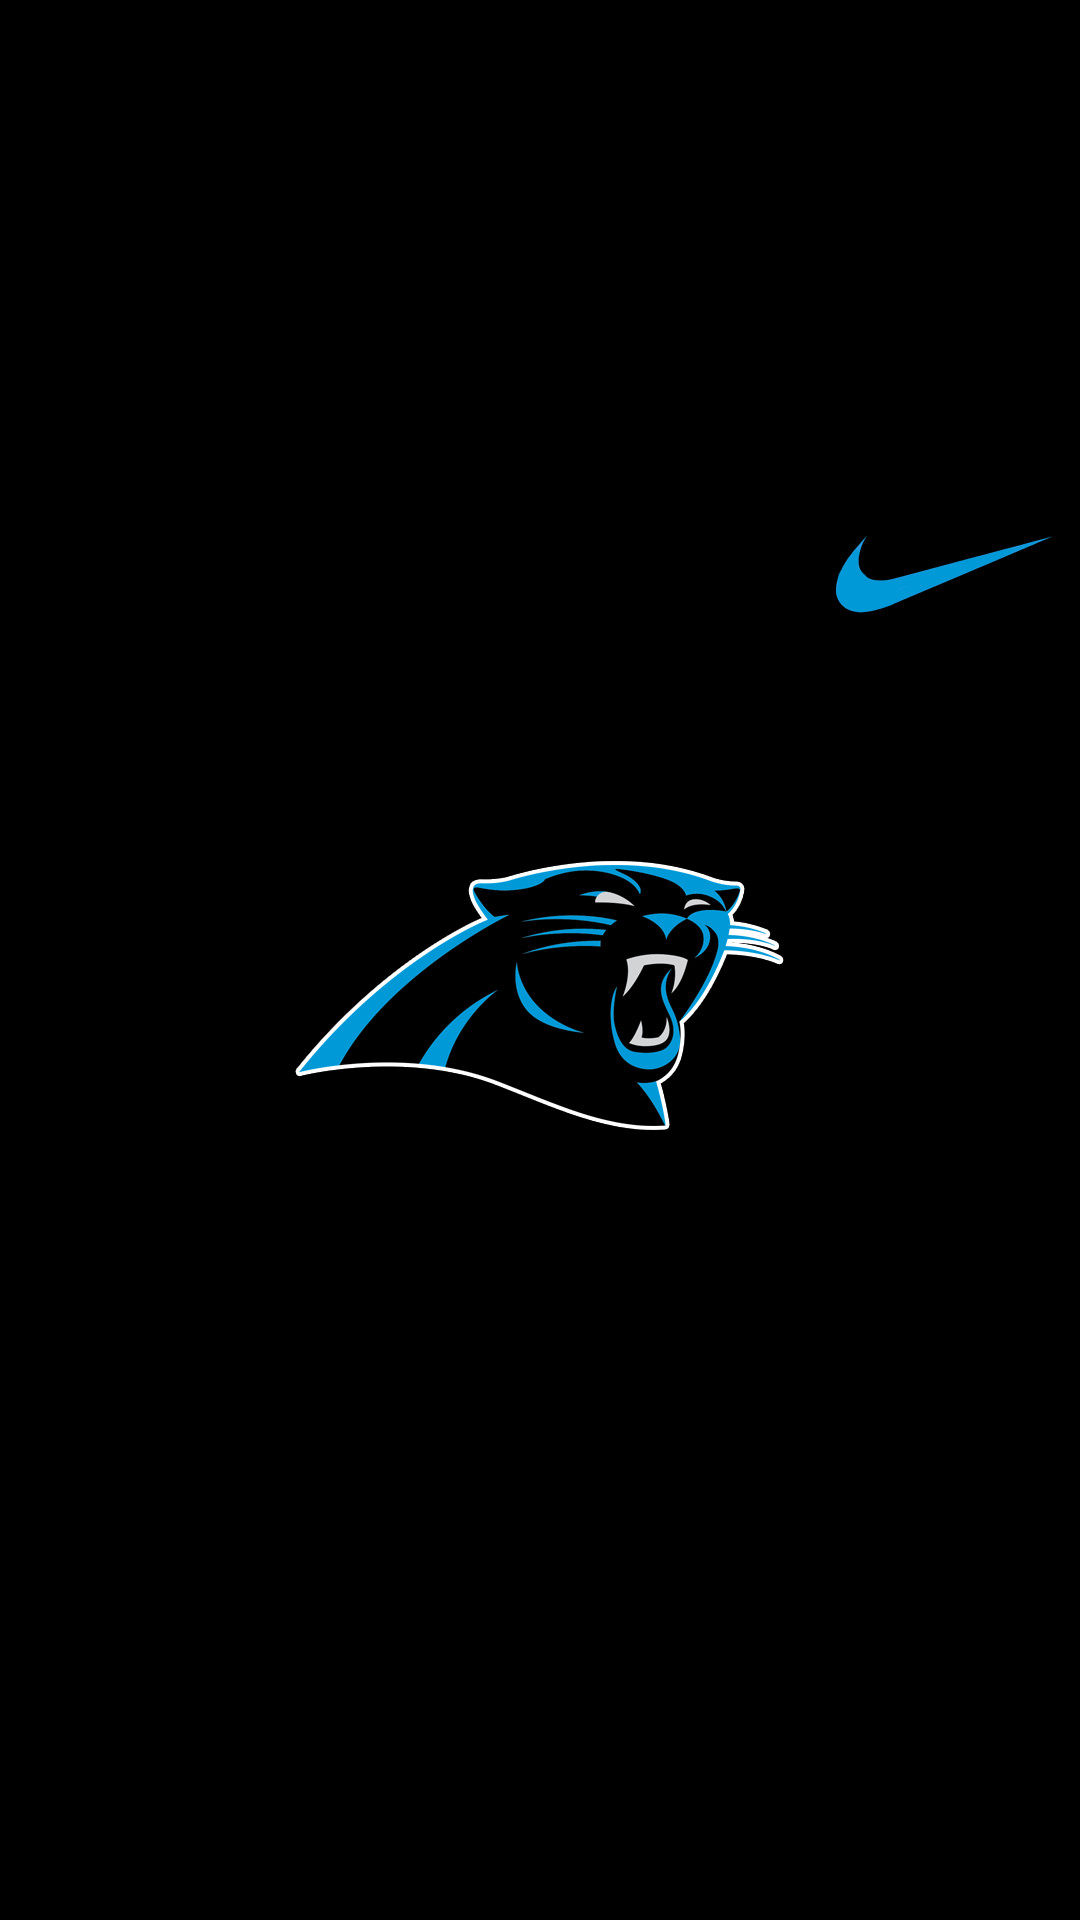 1080x1920 Carolina Panthers Nike Background for Iphone.